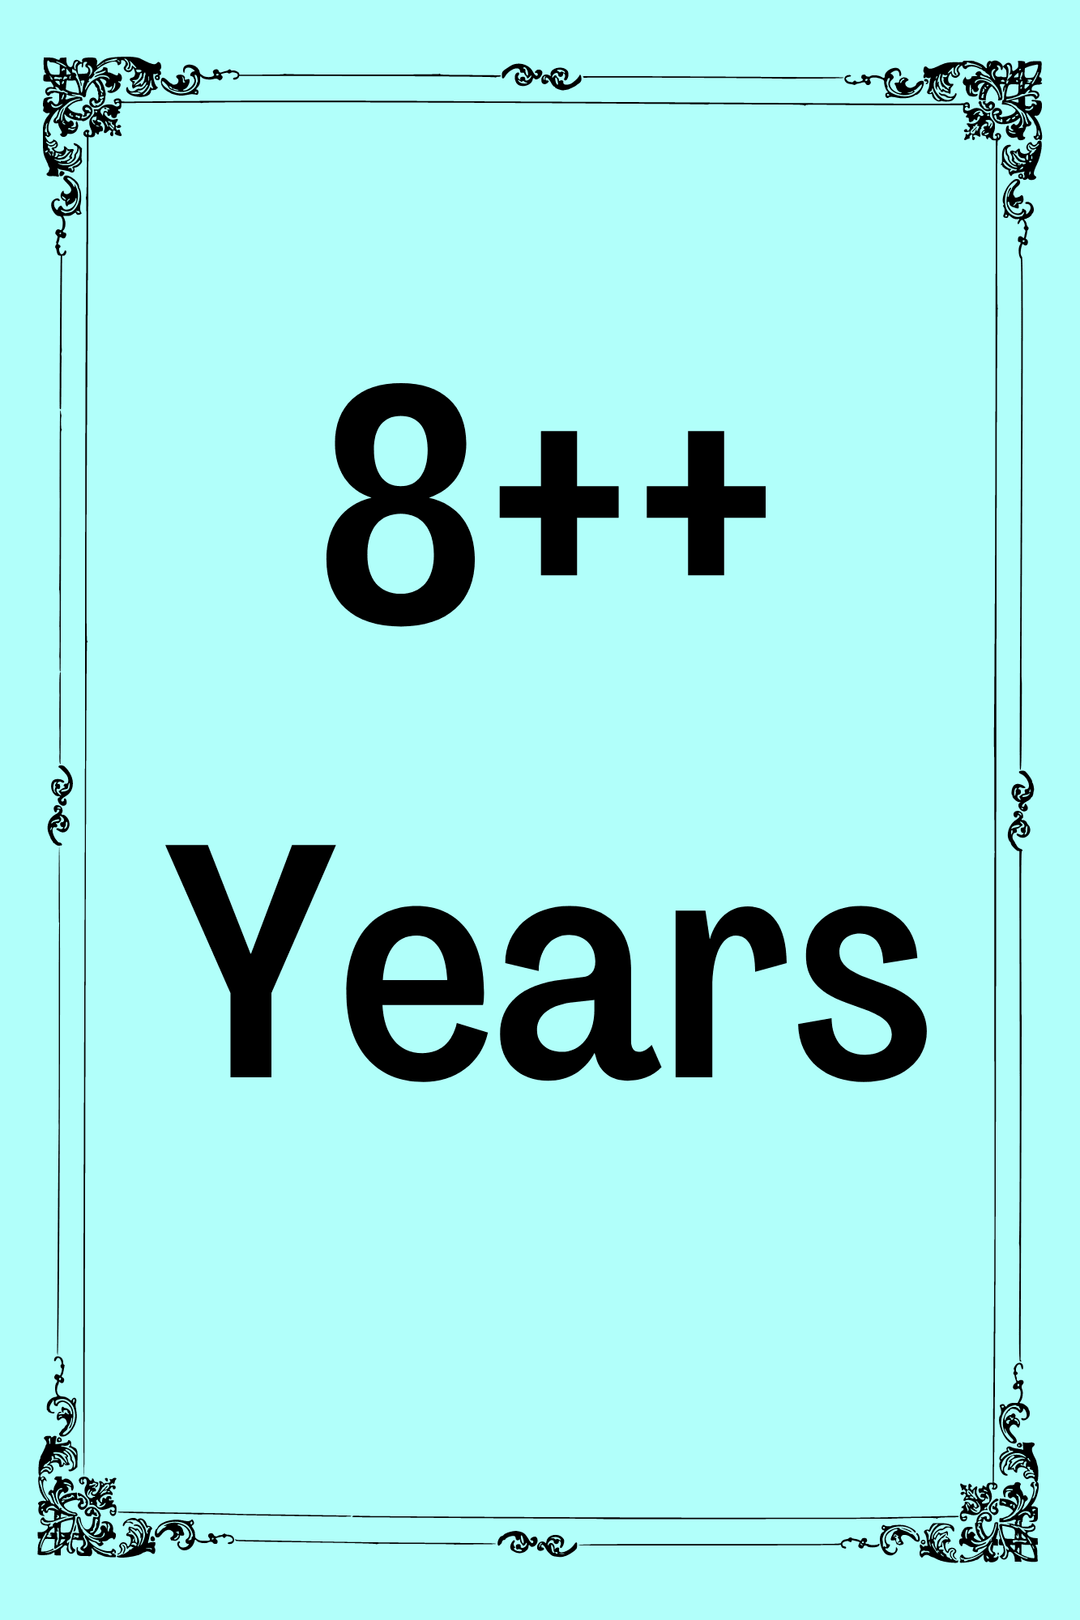 8++ Years